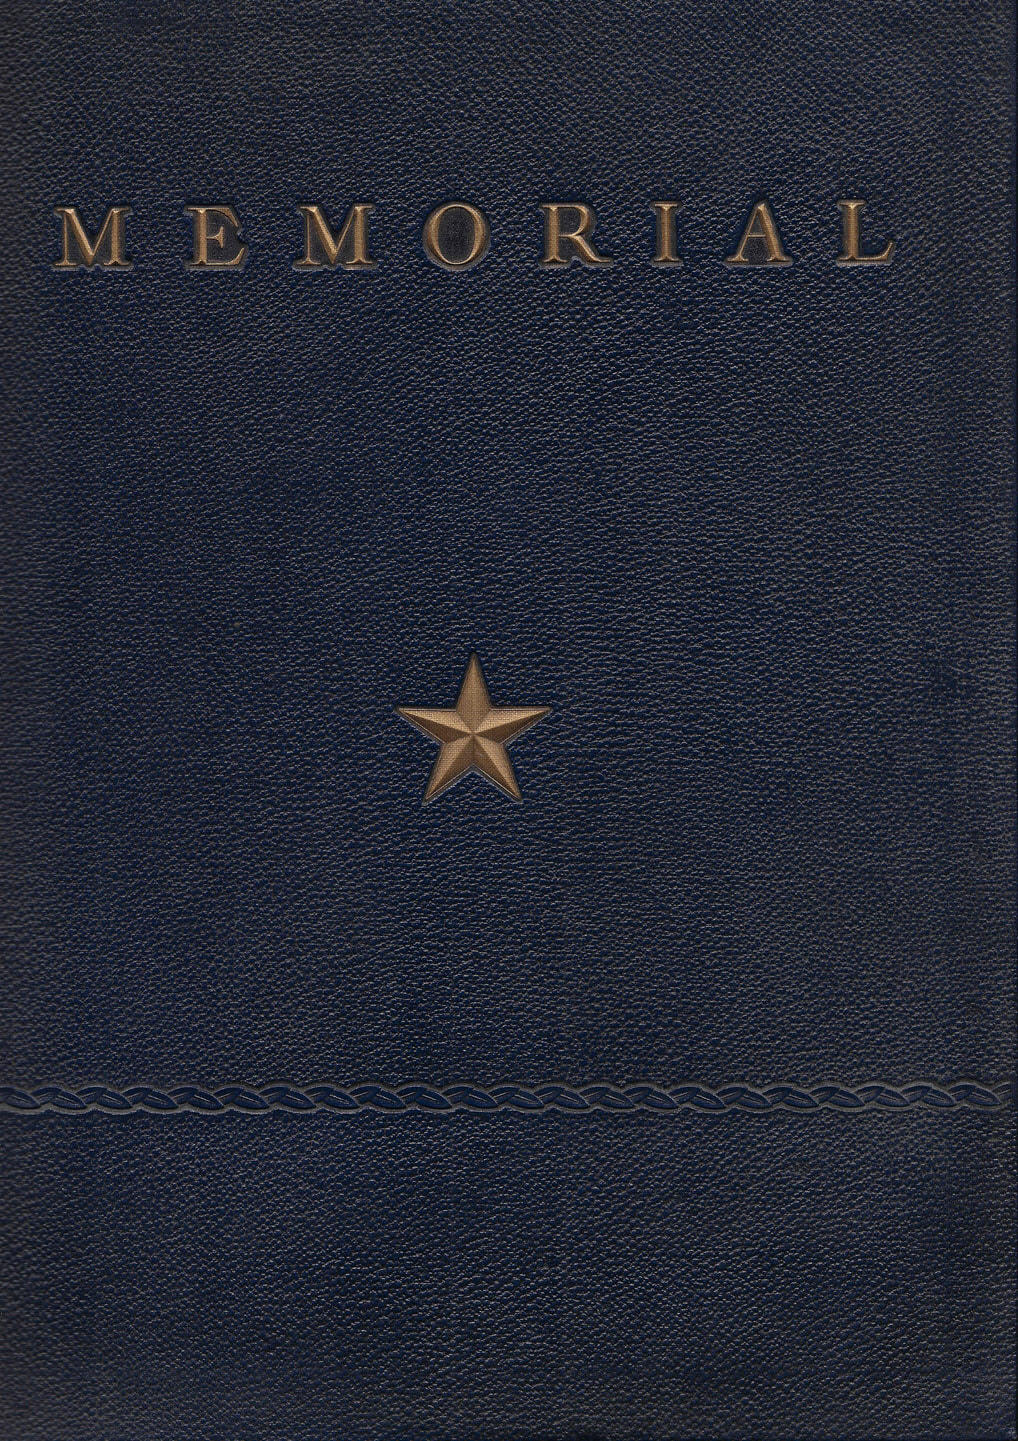 Image of front cover of the Endicott Memorial Dedication Program.